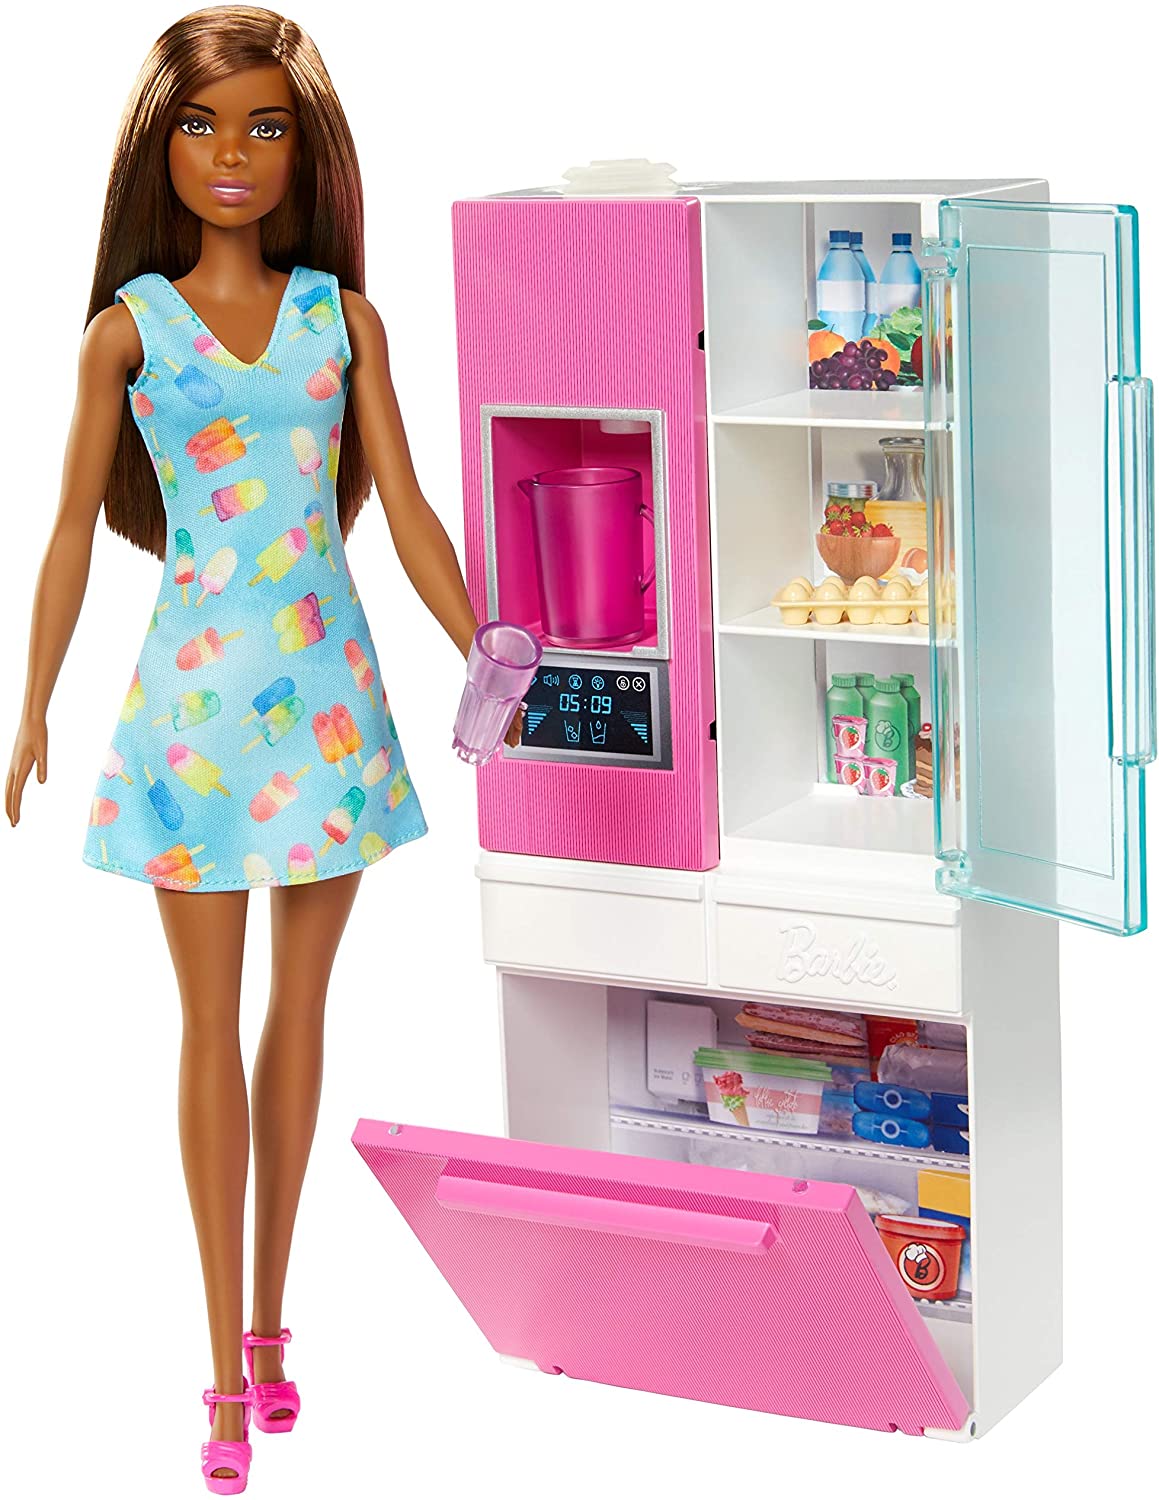 Barbie- Bambola Bruna Playset Arredamento con Frigorifero